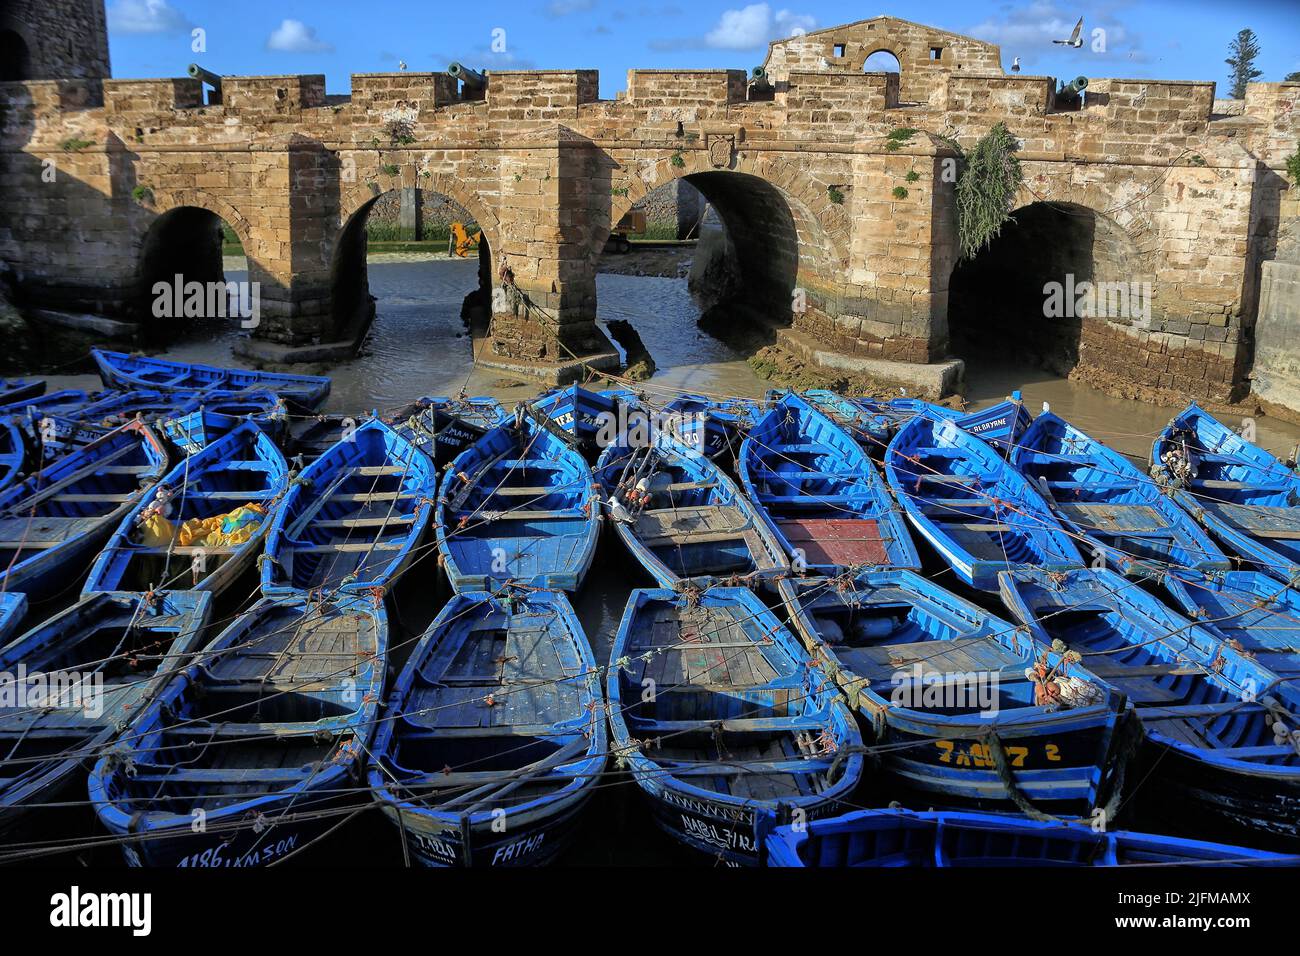 Marokko Essaouria Hafen- blaue Fischerboote vor der Festung 'Castelo Real de Mogador' Foto de stock